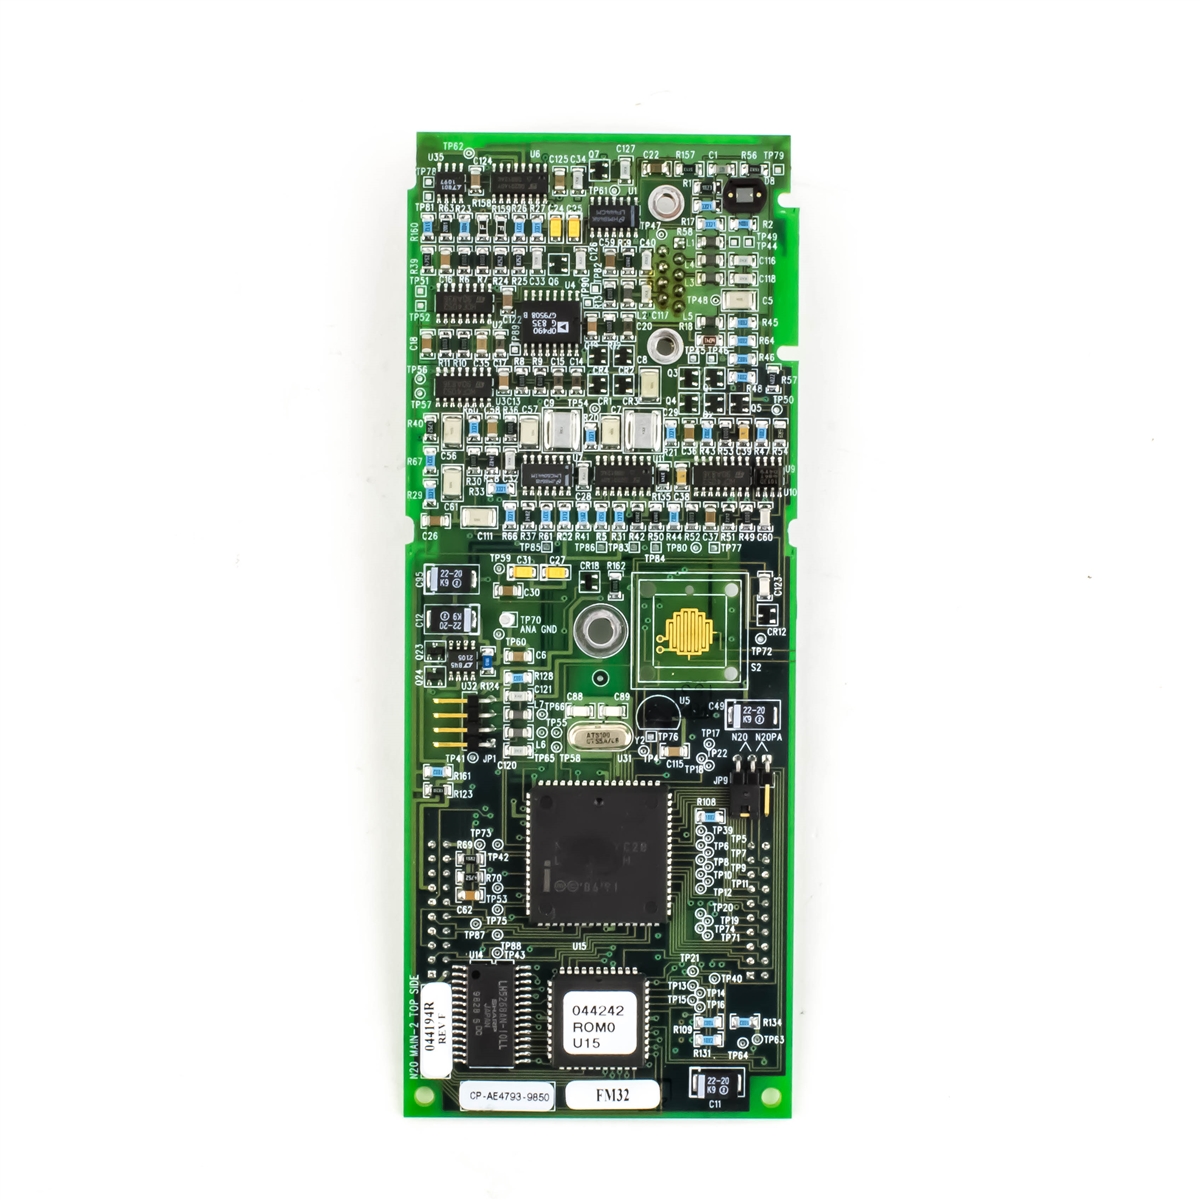 Nellcor N-20 Handheld Pulse Oximeter Main Circuit Board PCB